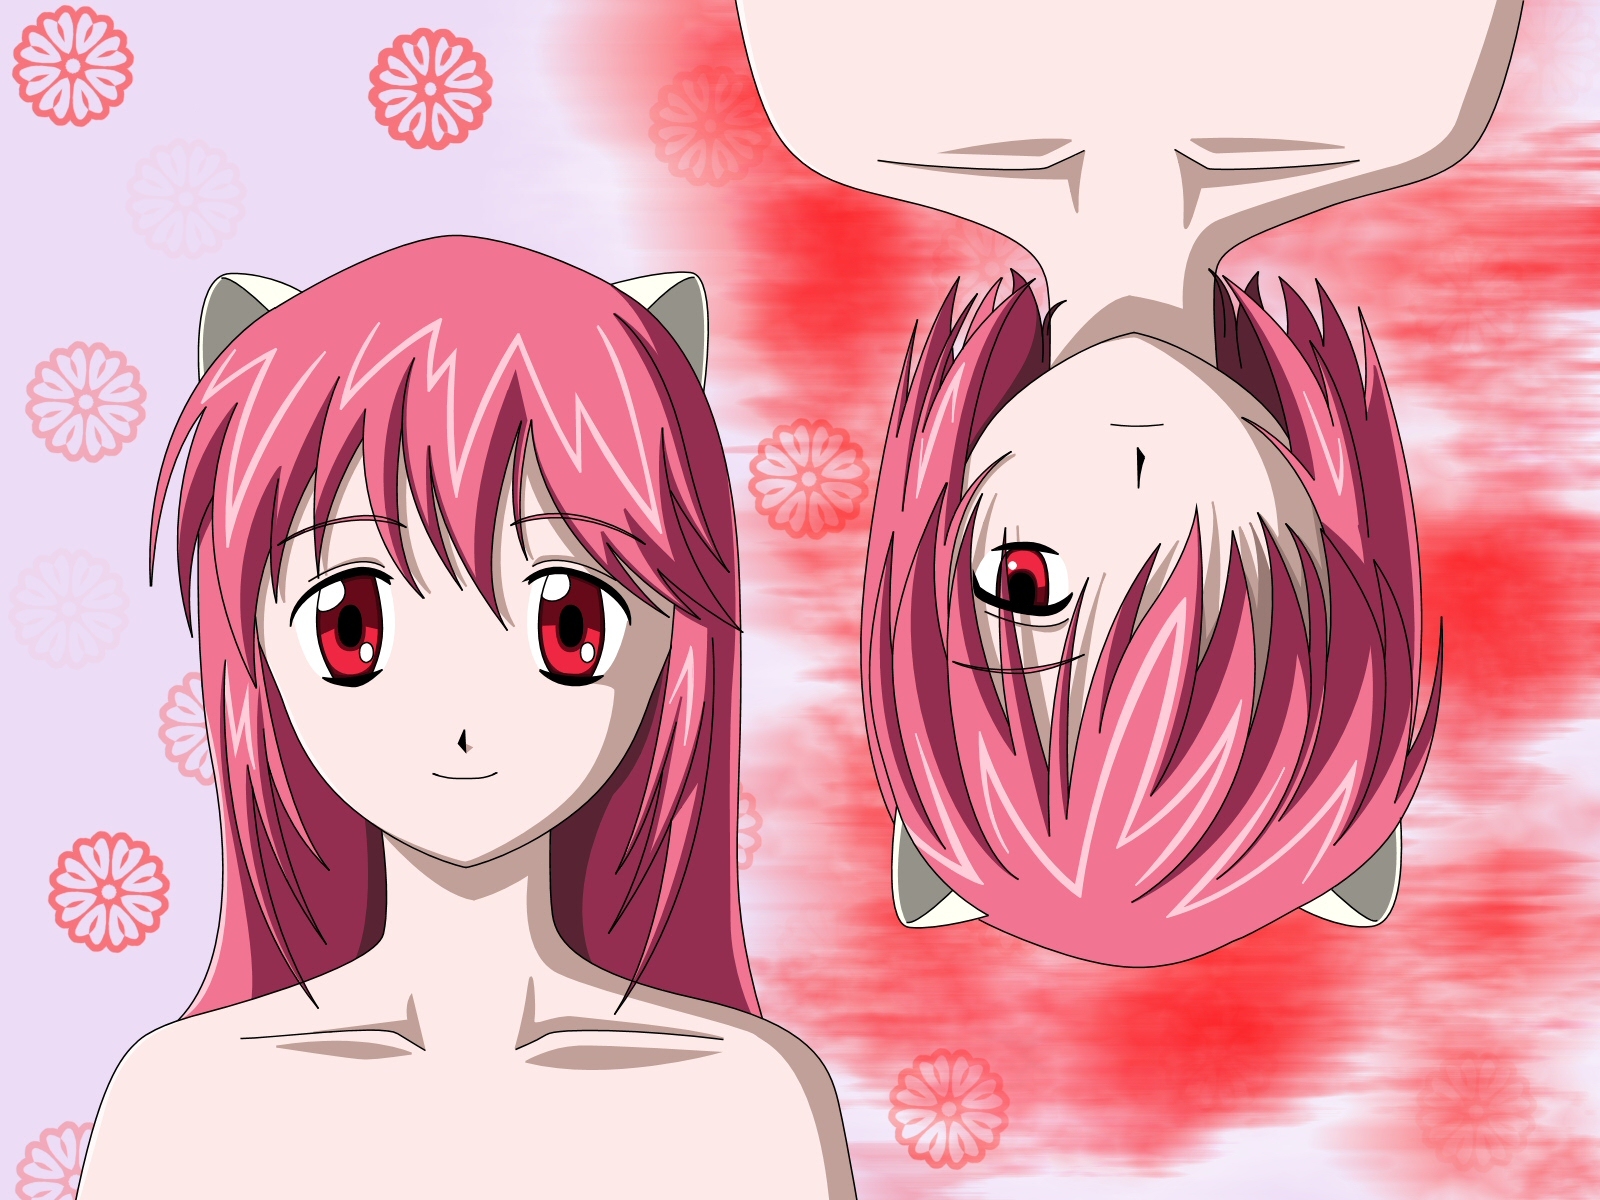 Anime character Lucy (Elfen Lied) from desktop wallpaper.